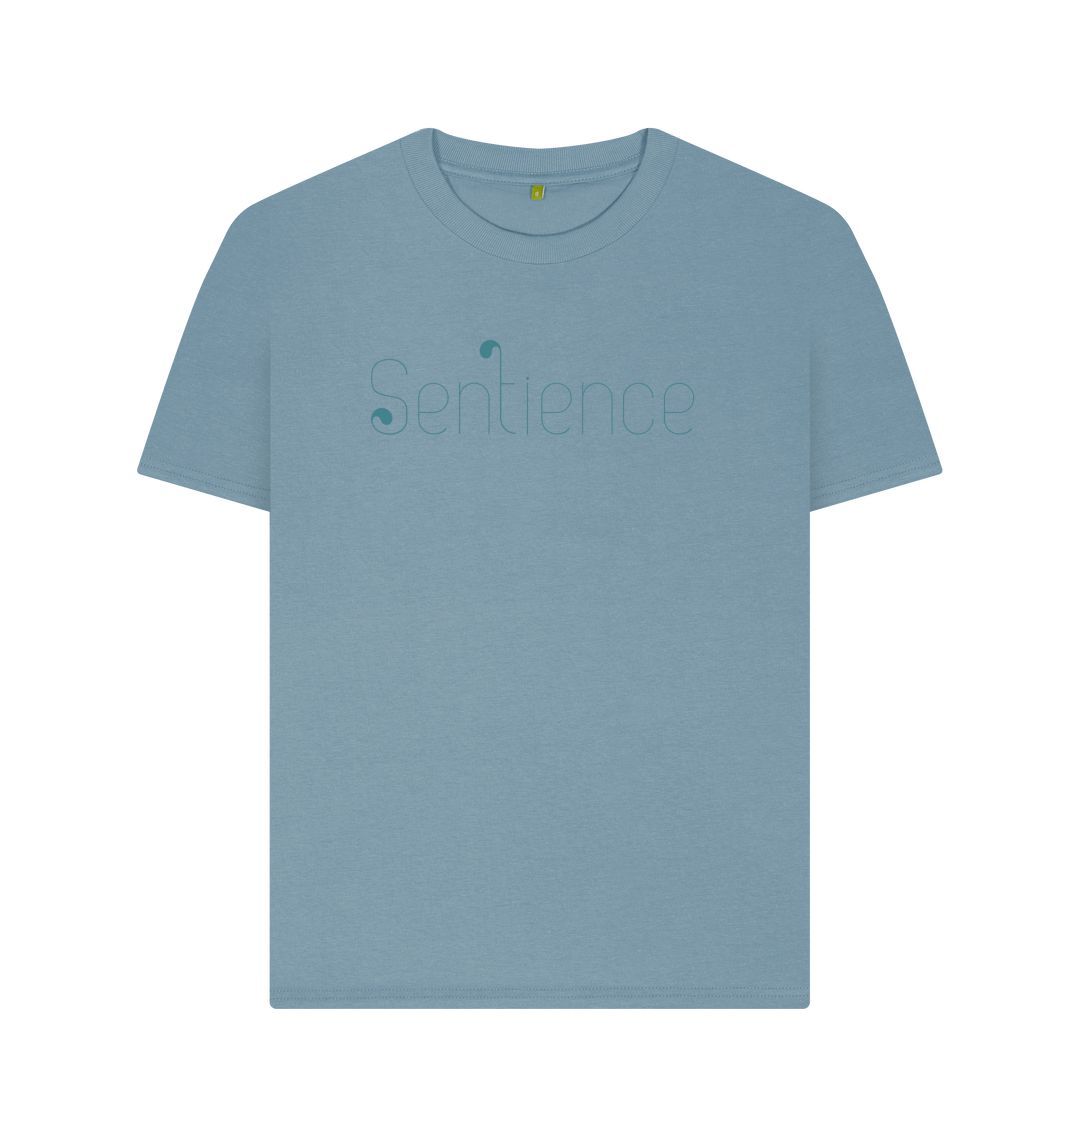 Stone Blue Sentience T-Shirt